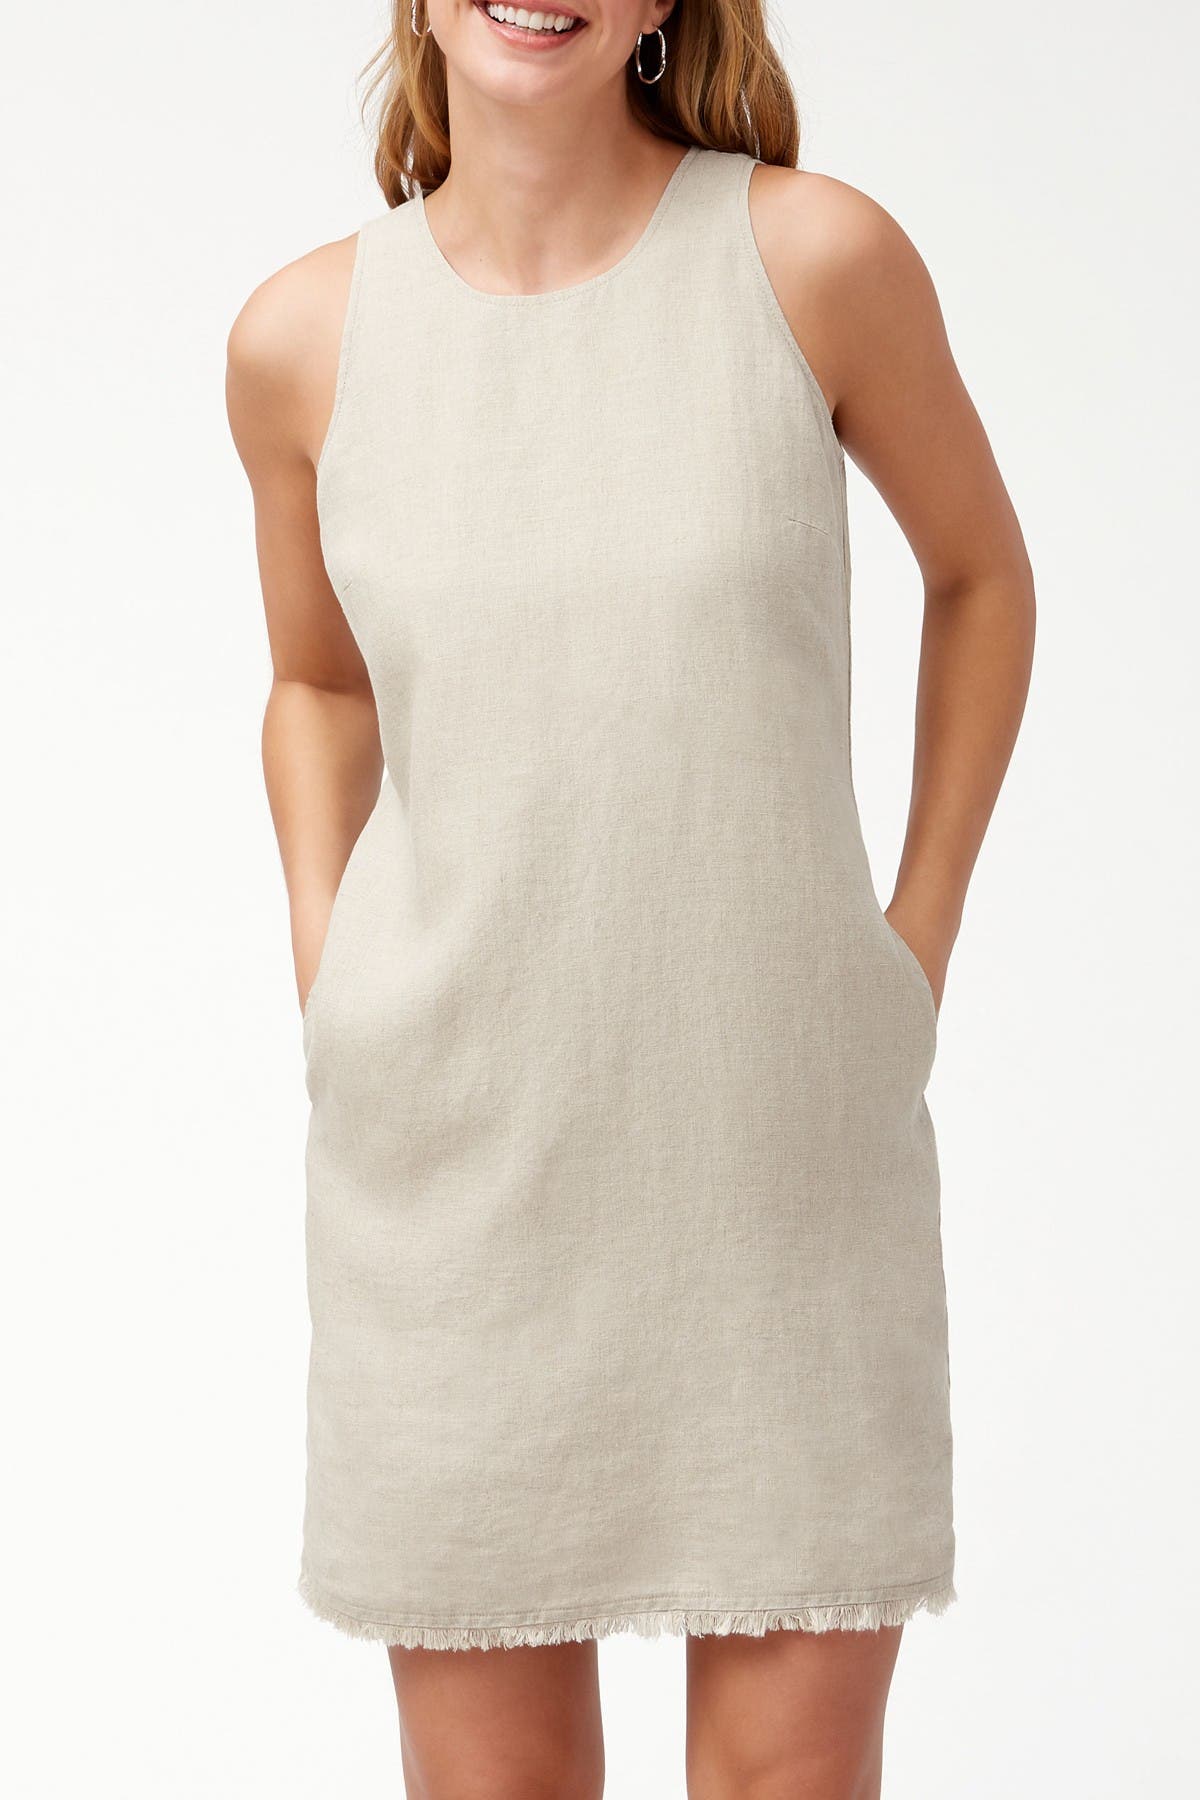 tommy bahama white linen dress